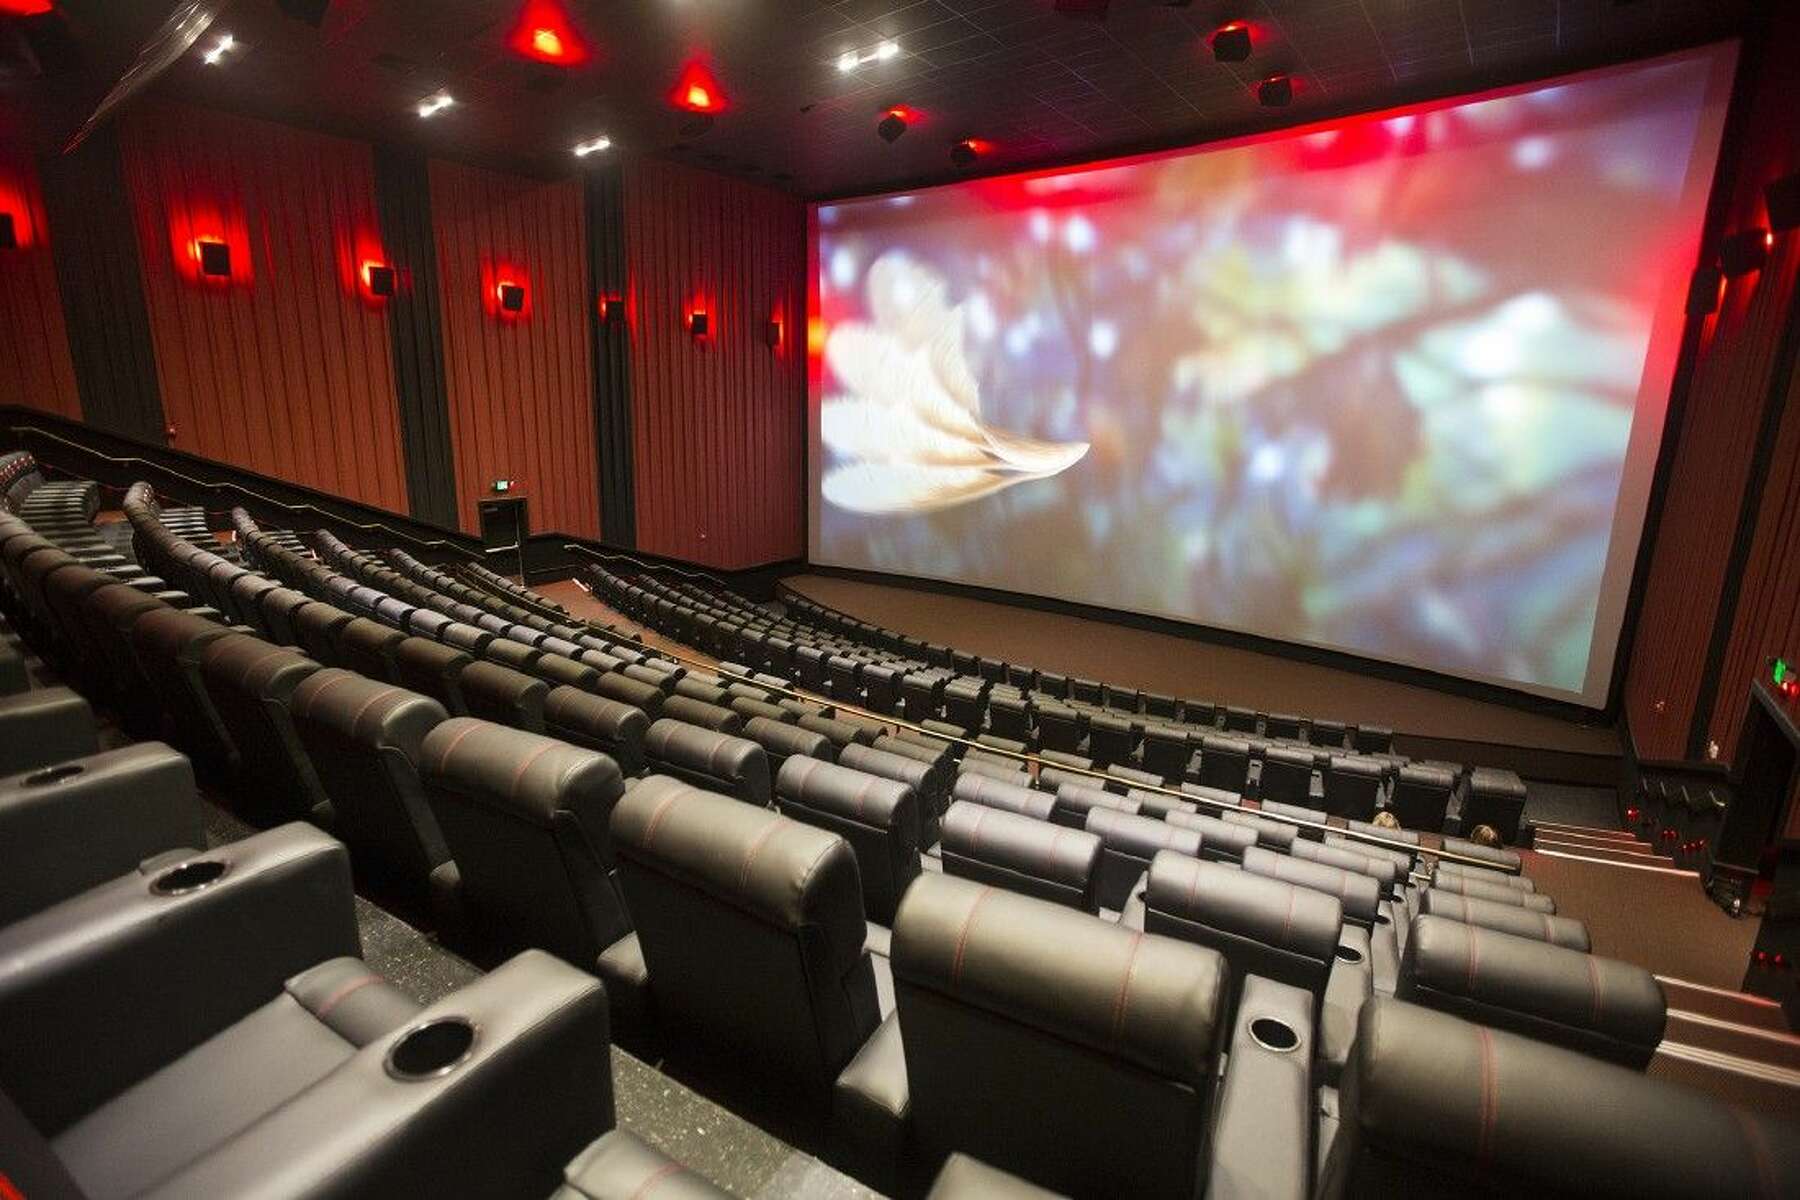 Showbiz Cinemas Opens Sdx Theater In Kingwood